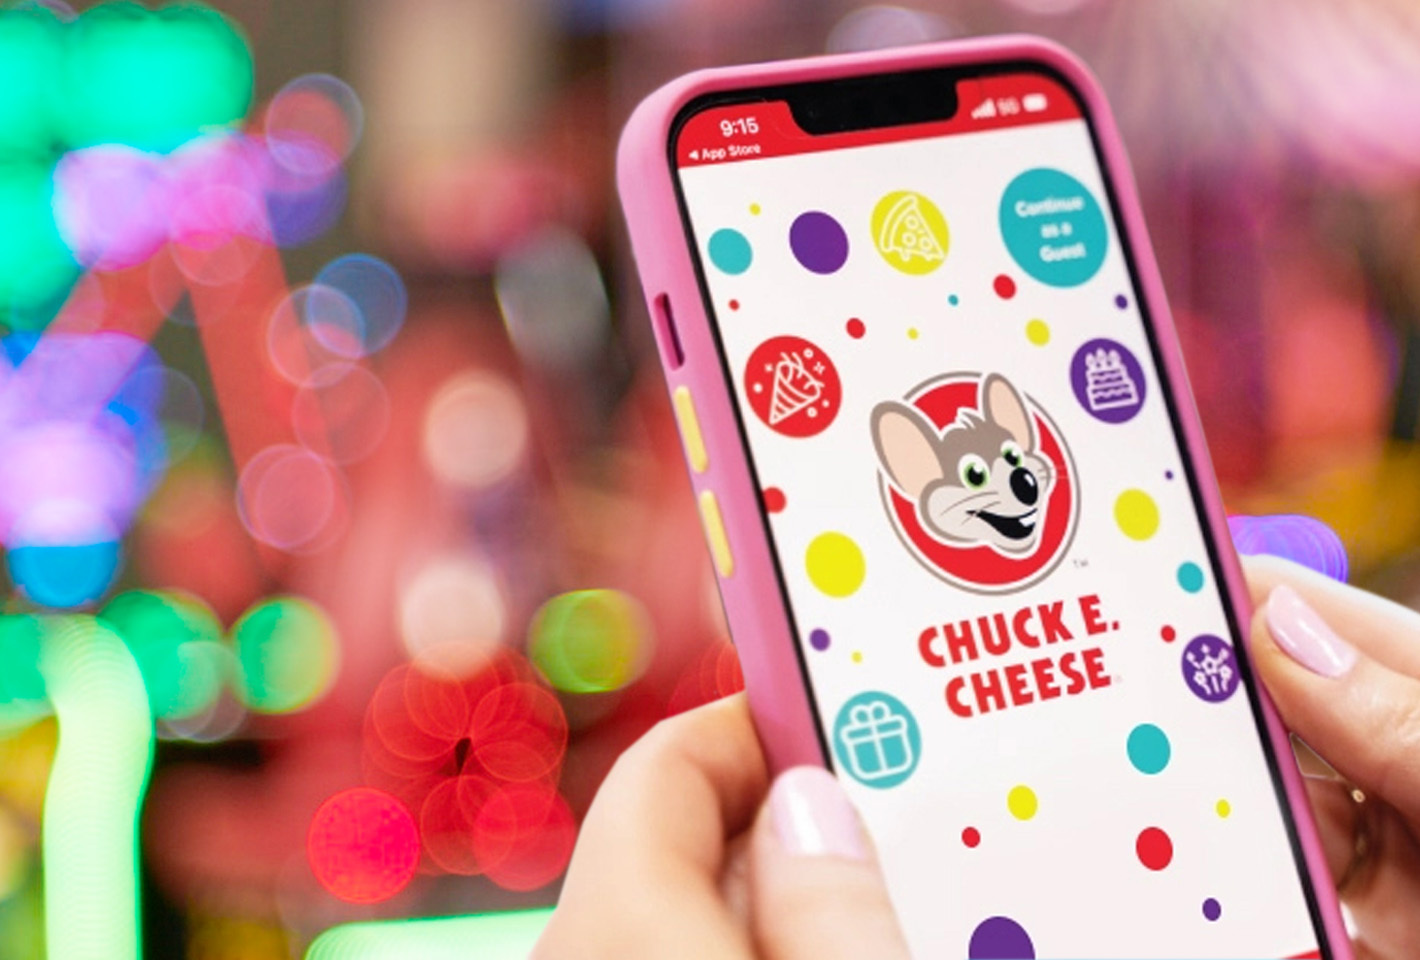 The Chuck E. Cheese app open on phone